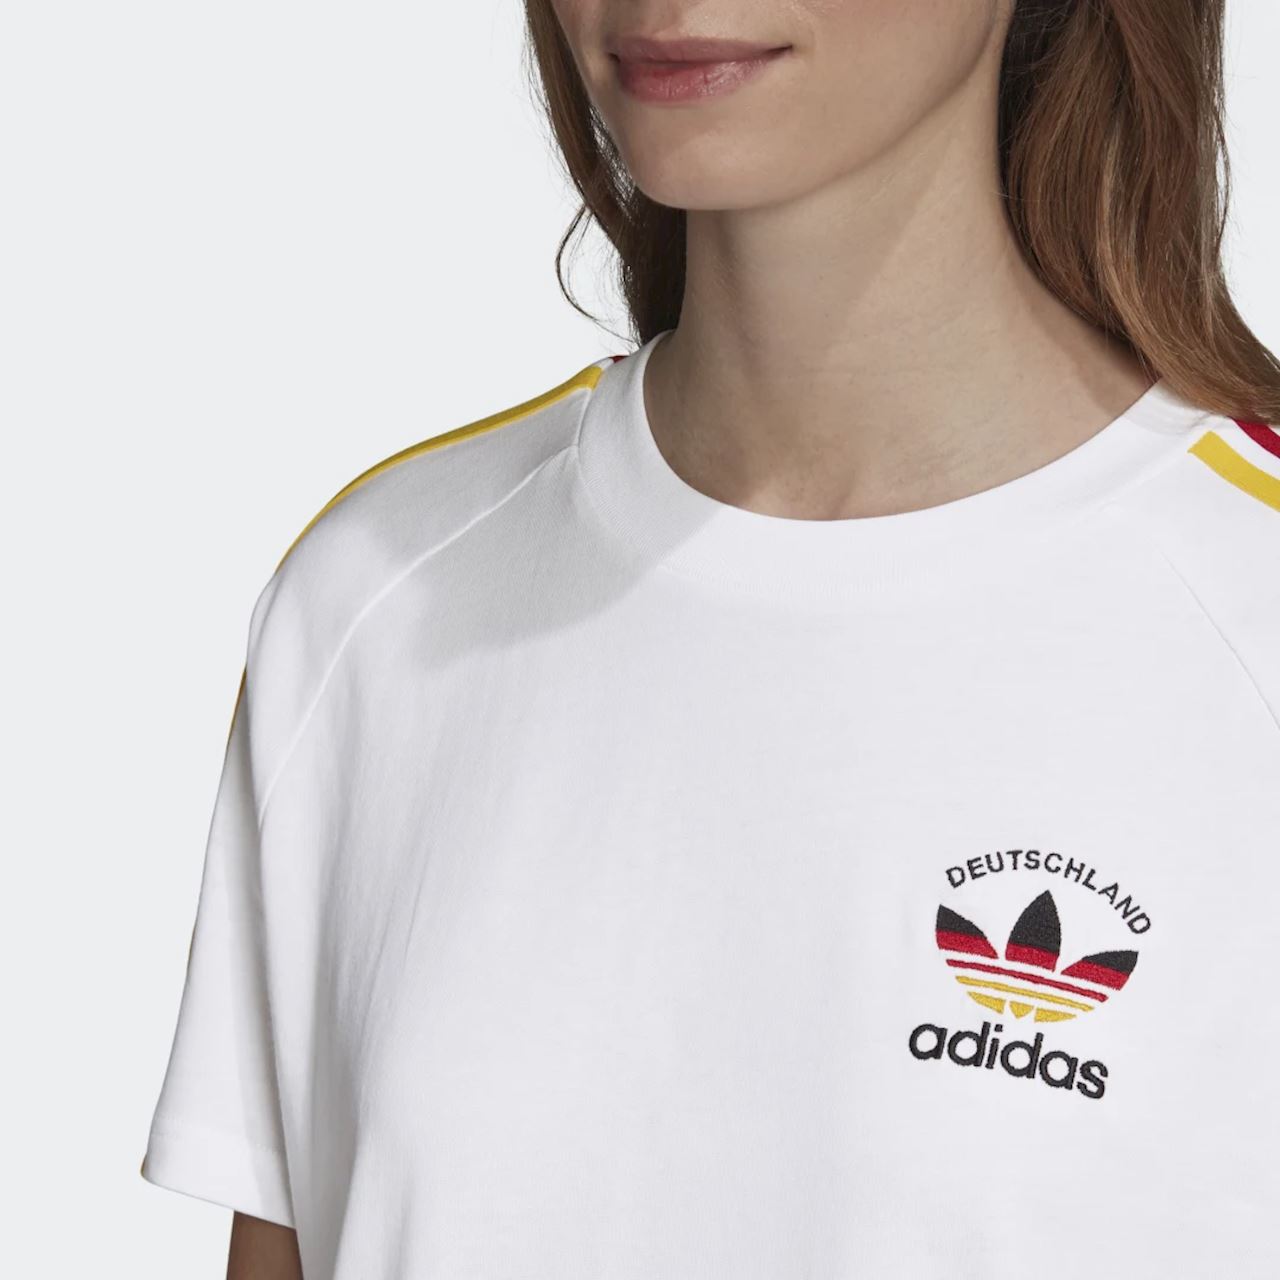 Yogur implícito cuchara Adidas Originals Mujer Deutschland Tee Dress - Blanco - Trade Sports